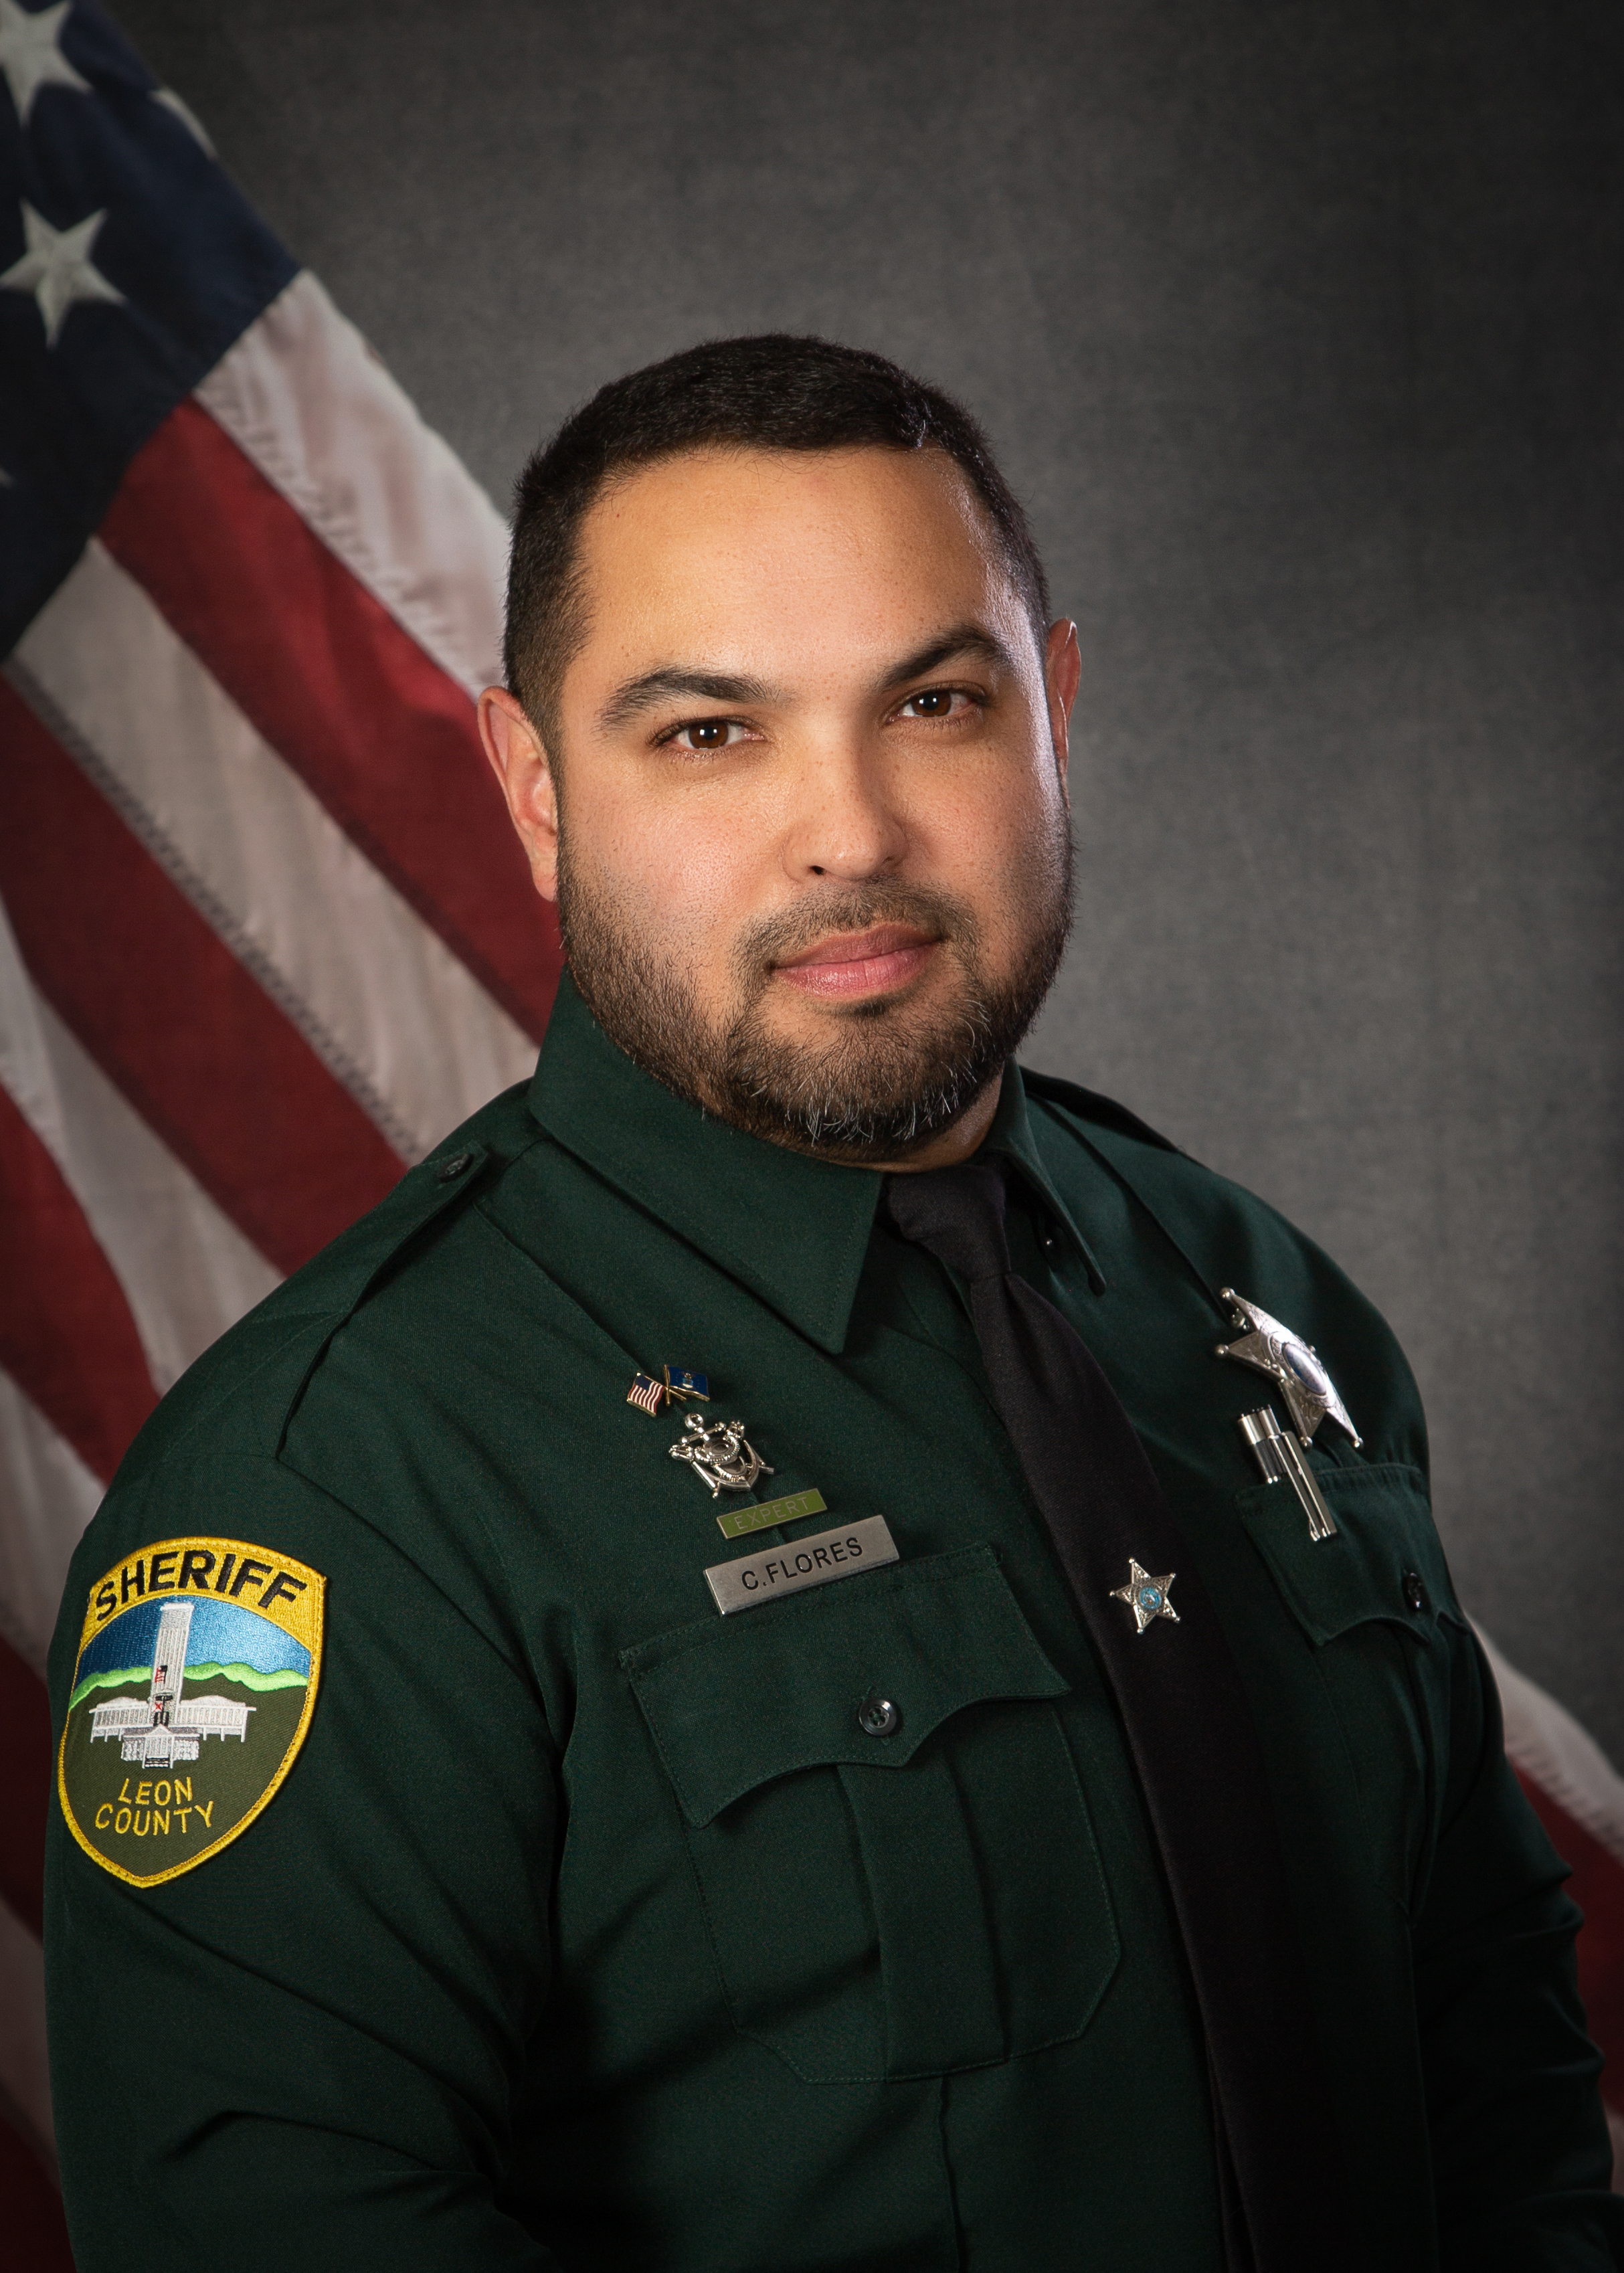 Fairview – Deputy Christopher Flores